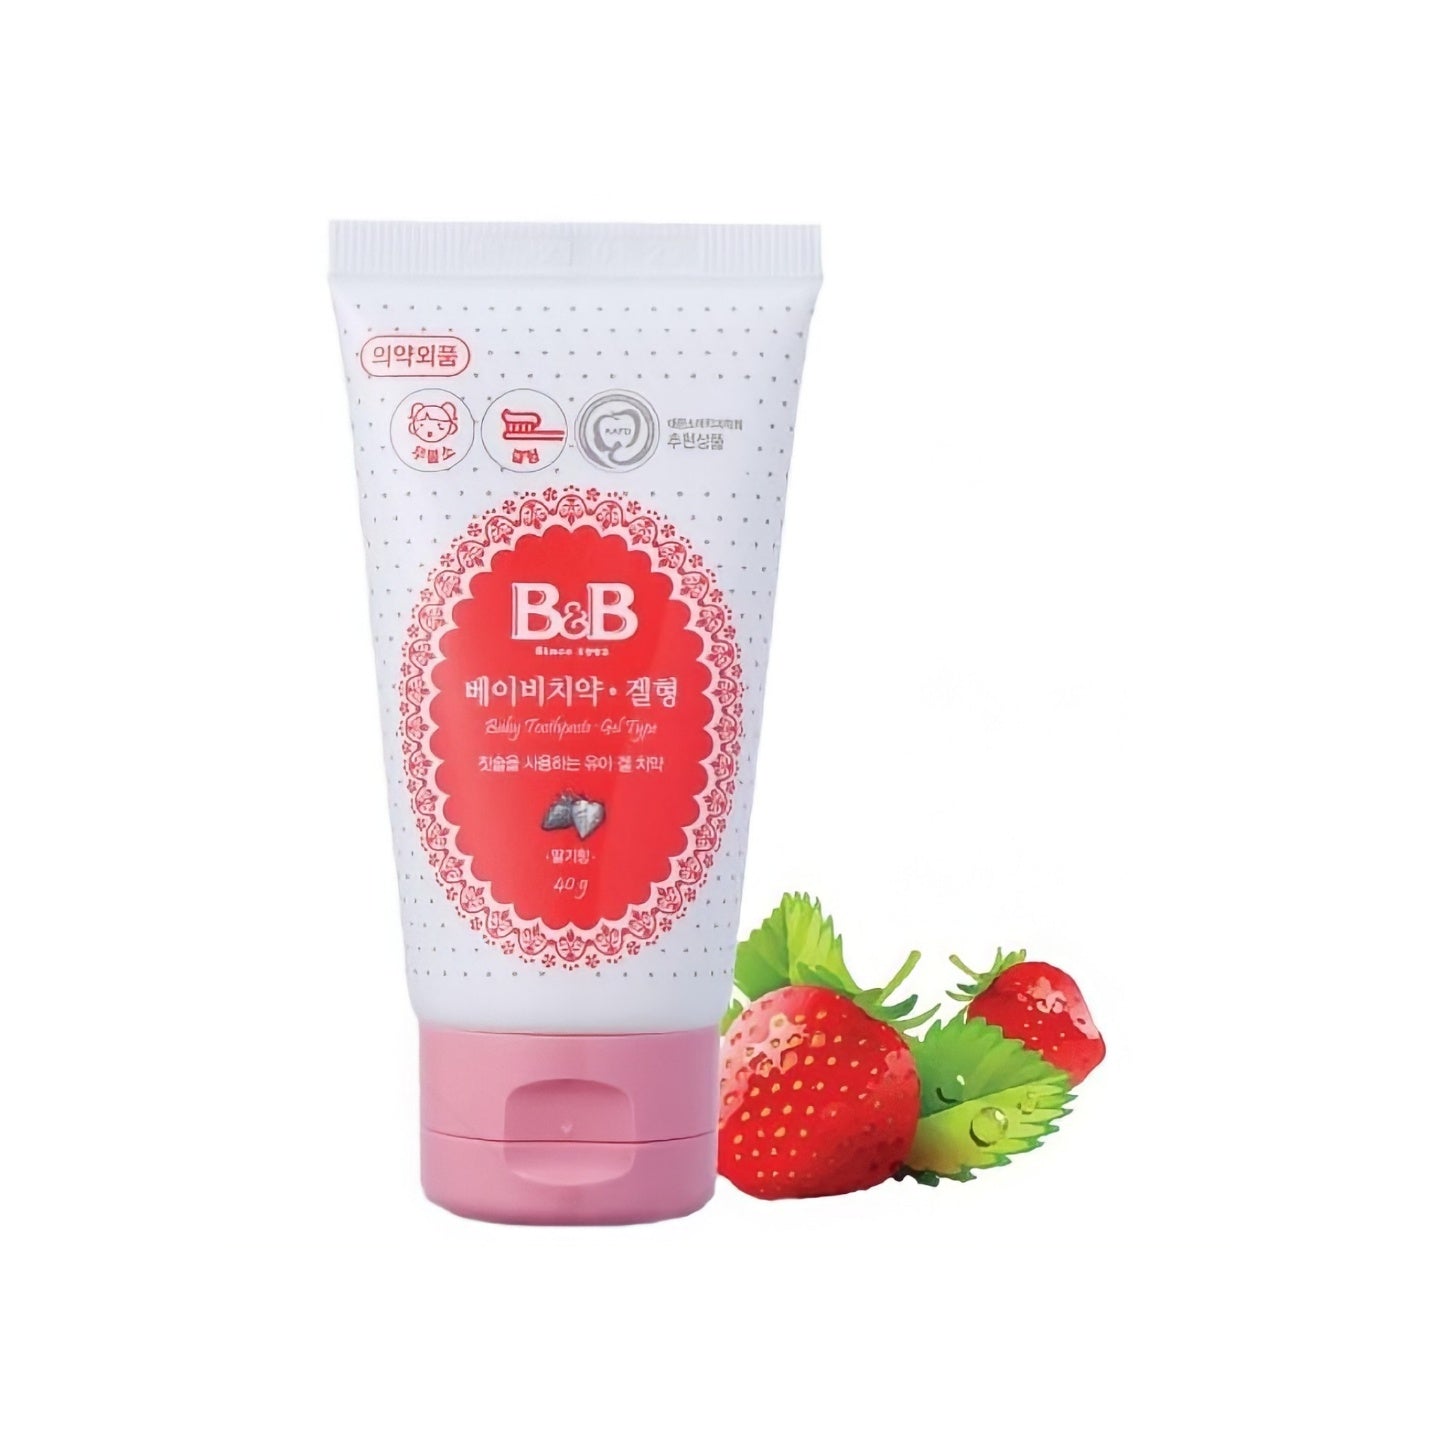 B&B Baby Toothpaste Gel Type 비앤비 베이비 치약 겔형 40g